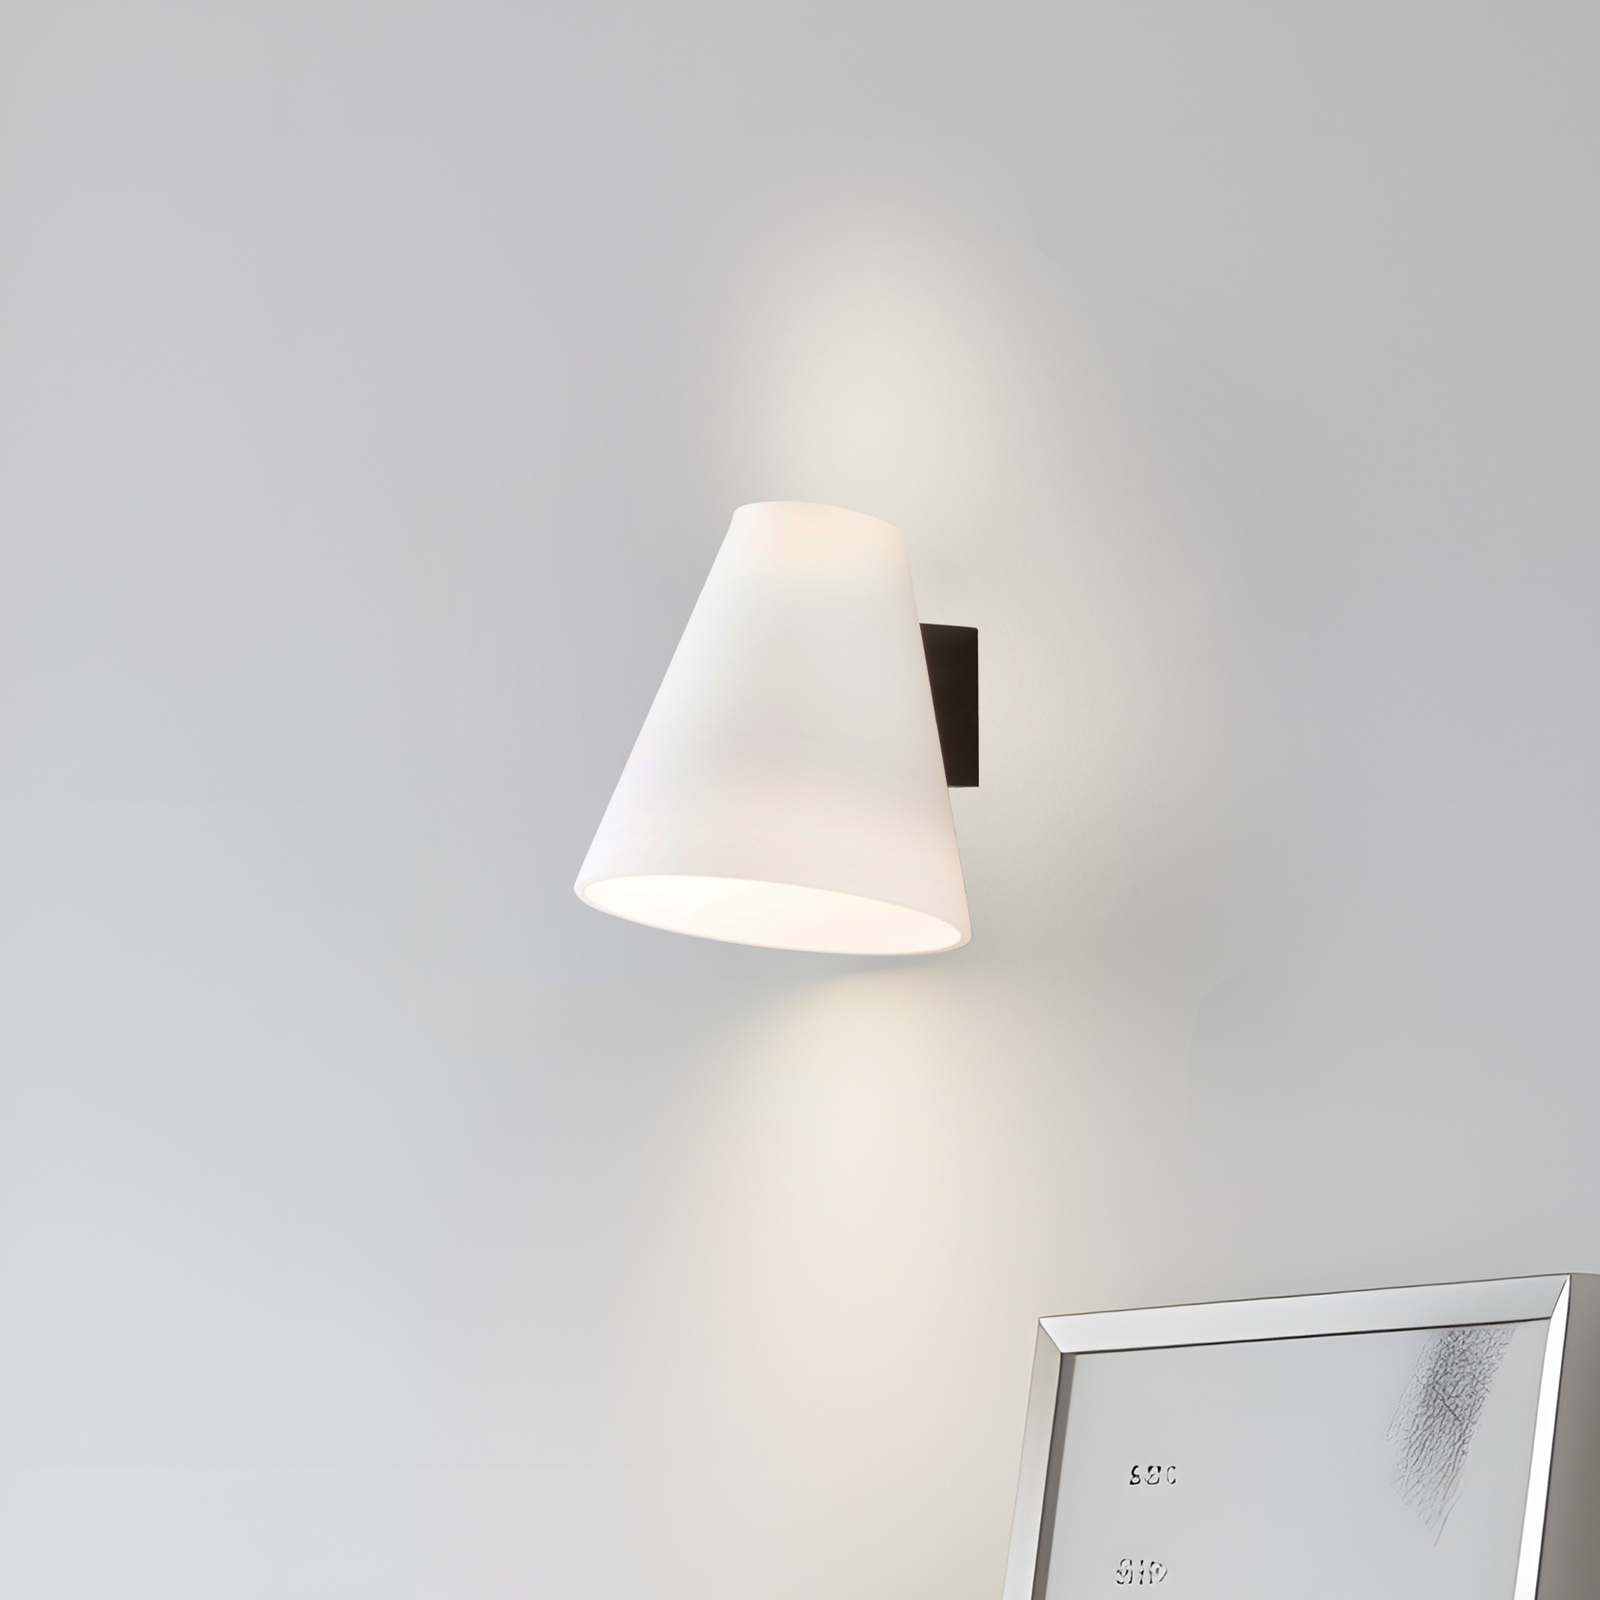 Lucande Timido wall light, white/black, glass, 16.5 cm high